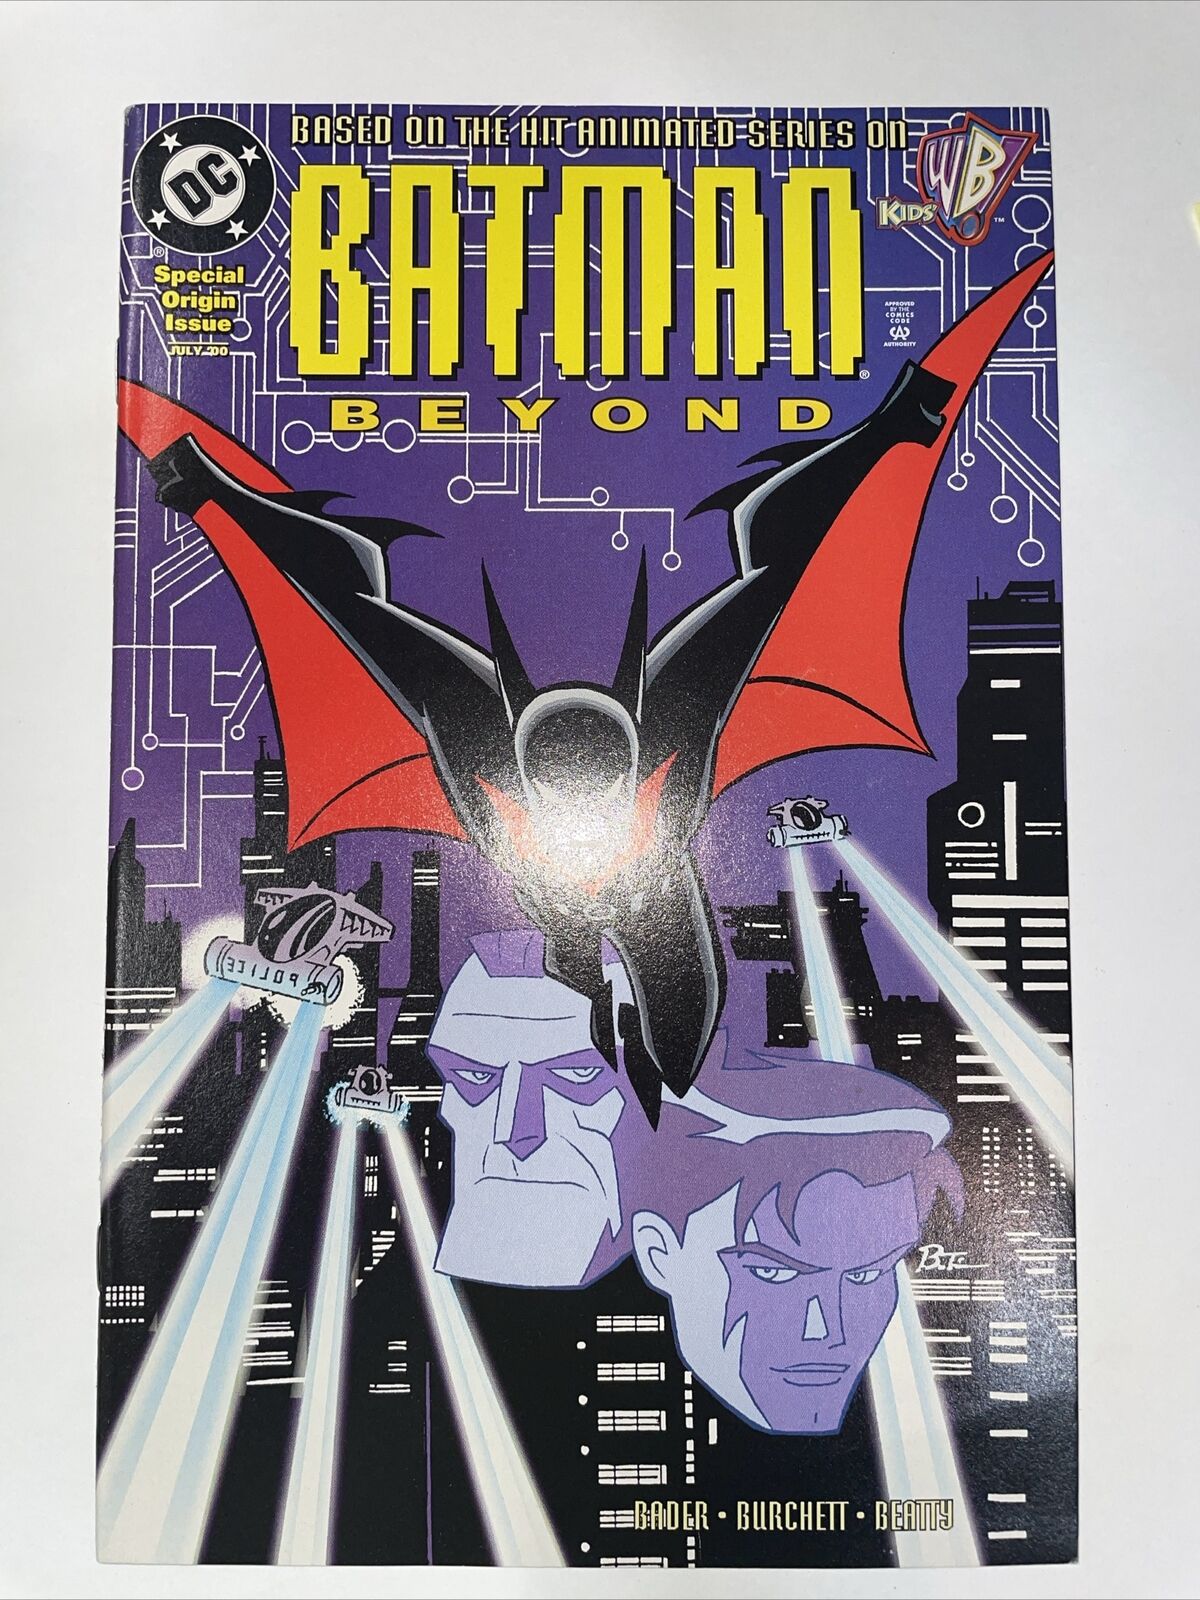 BATMAN BEYOND #1 Special Origin Issue 'Third Print' 2000 Beauty- *Rare*